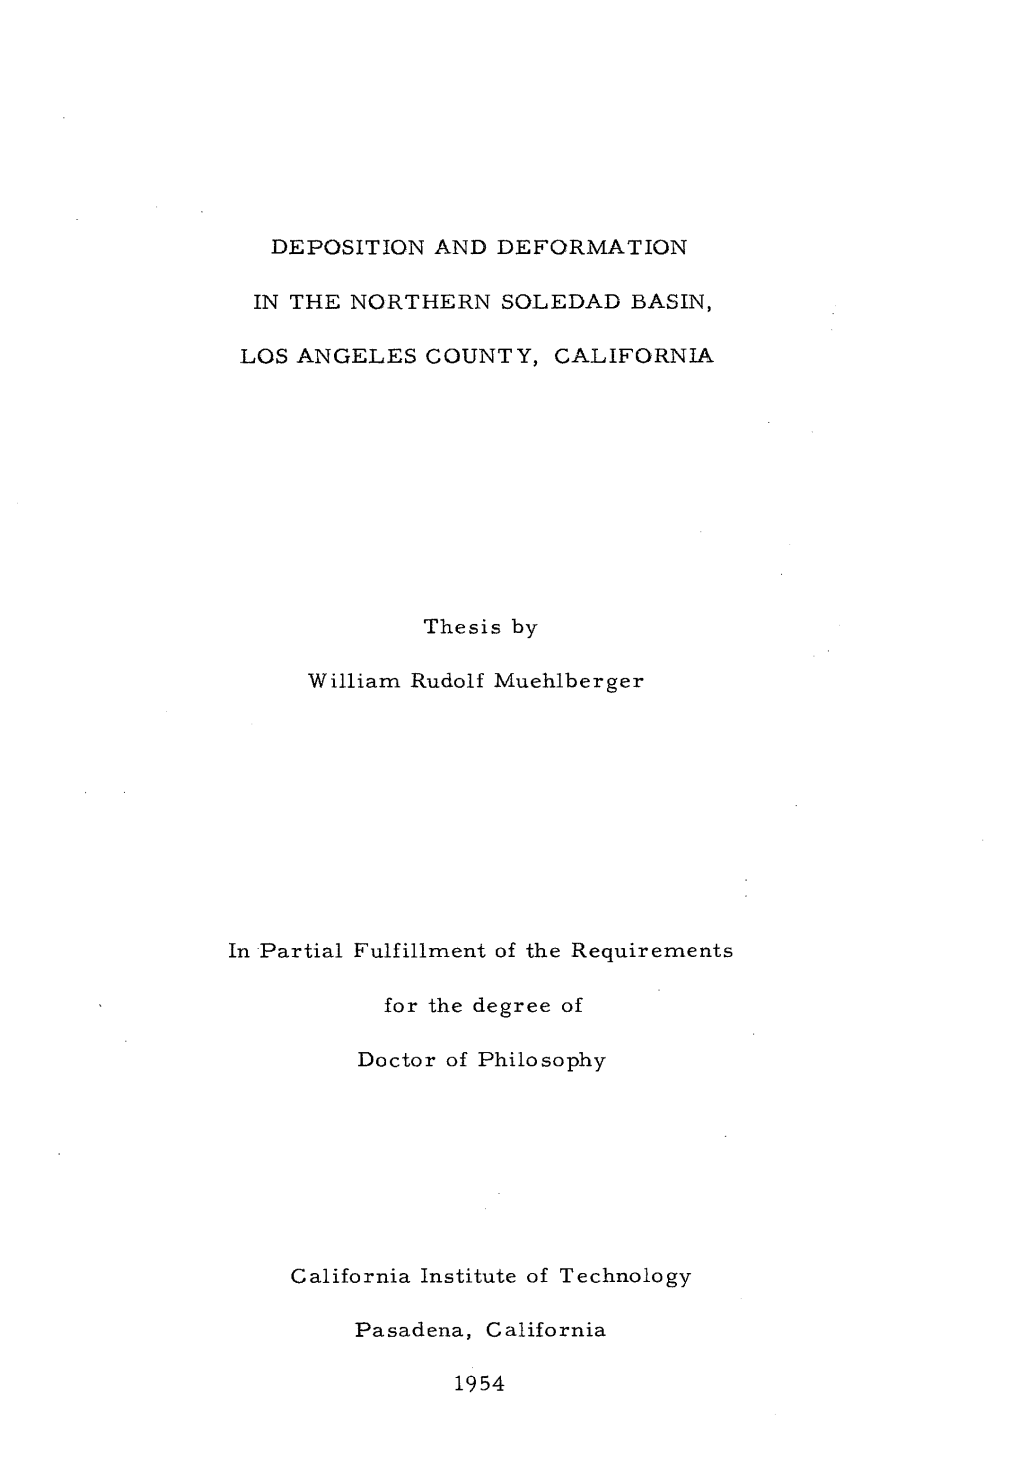 Deposition and Deformation in the Northern Soledad Basin (Muehlberger 1954)